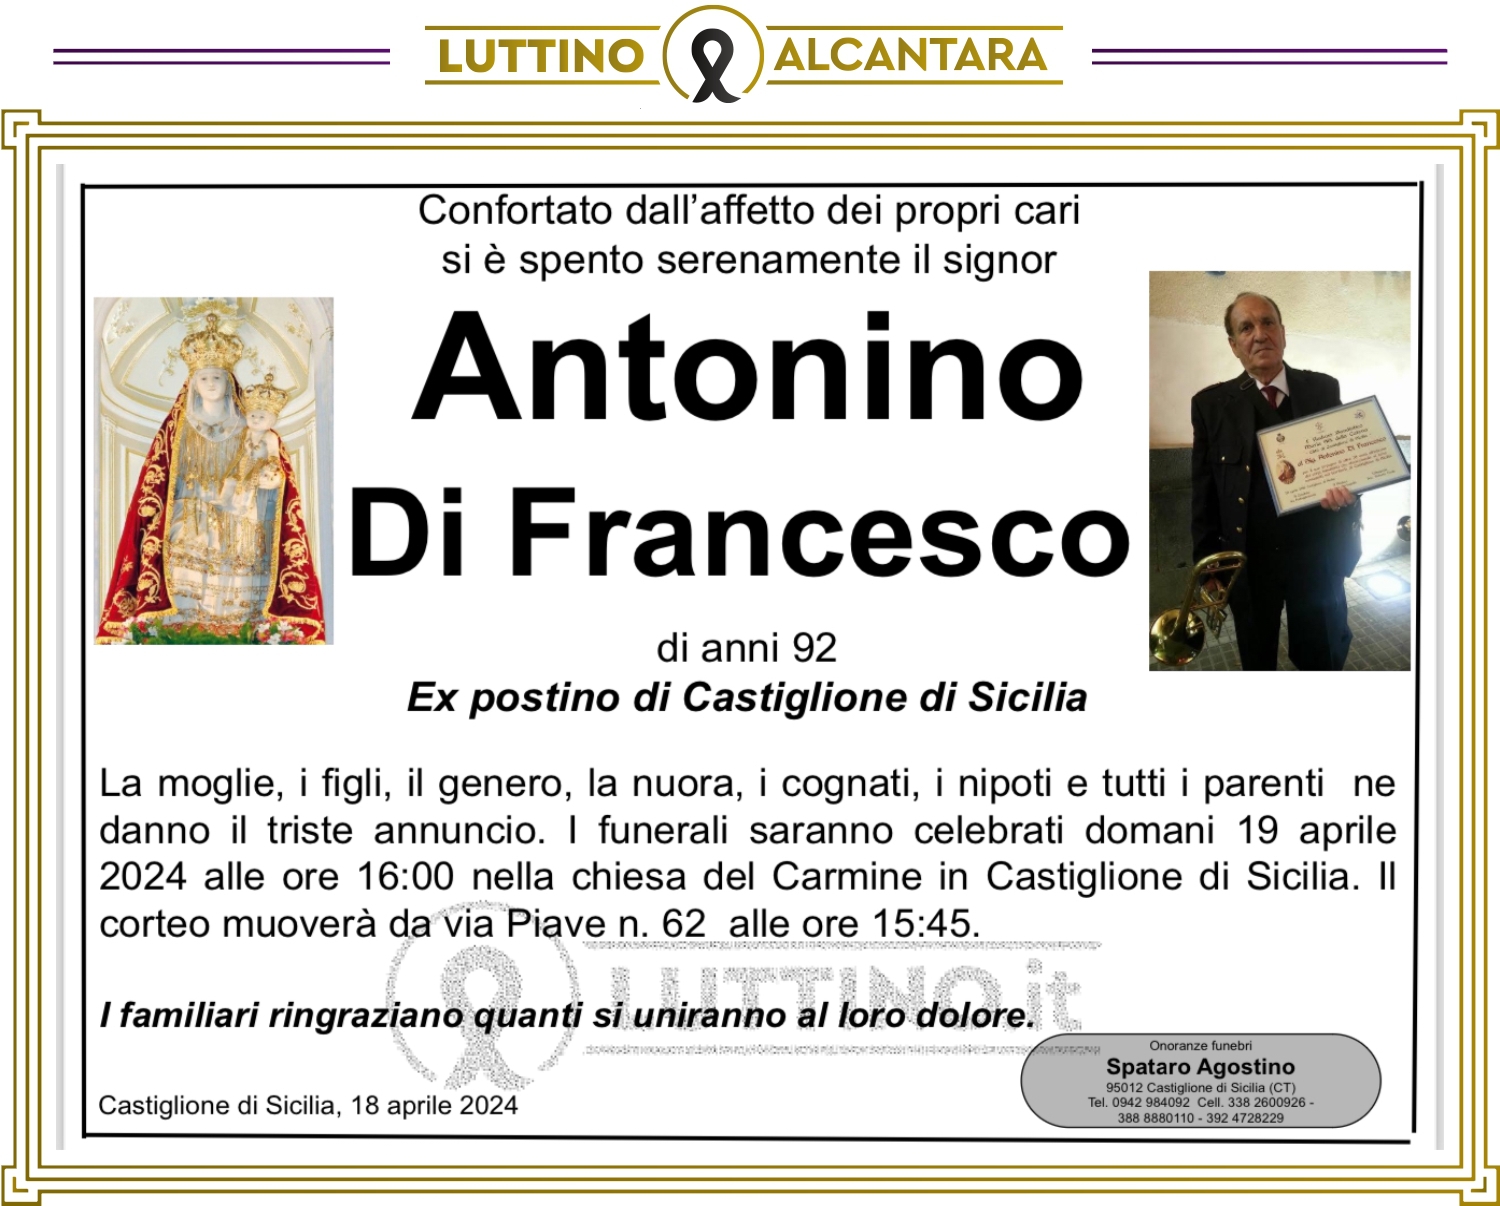 Antonino Di Francesco